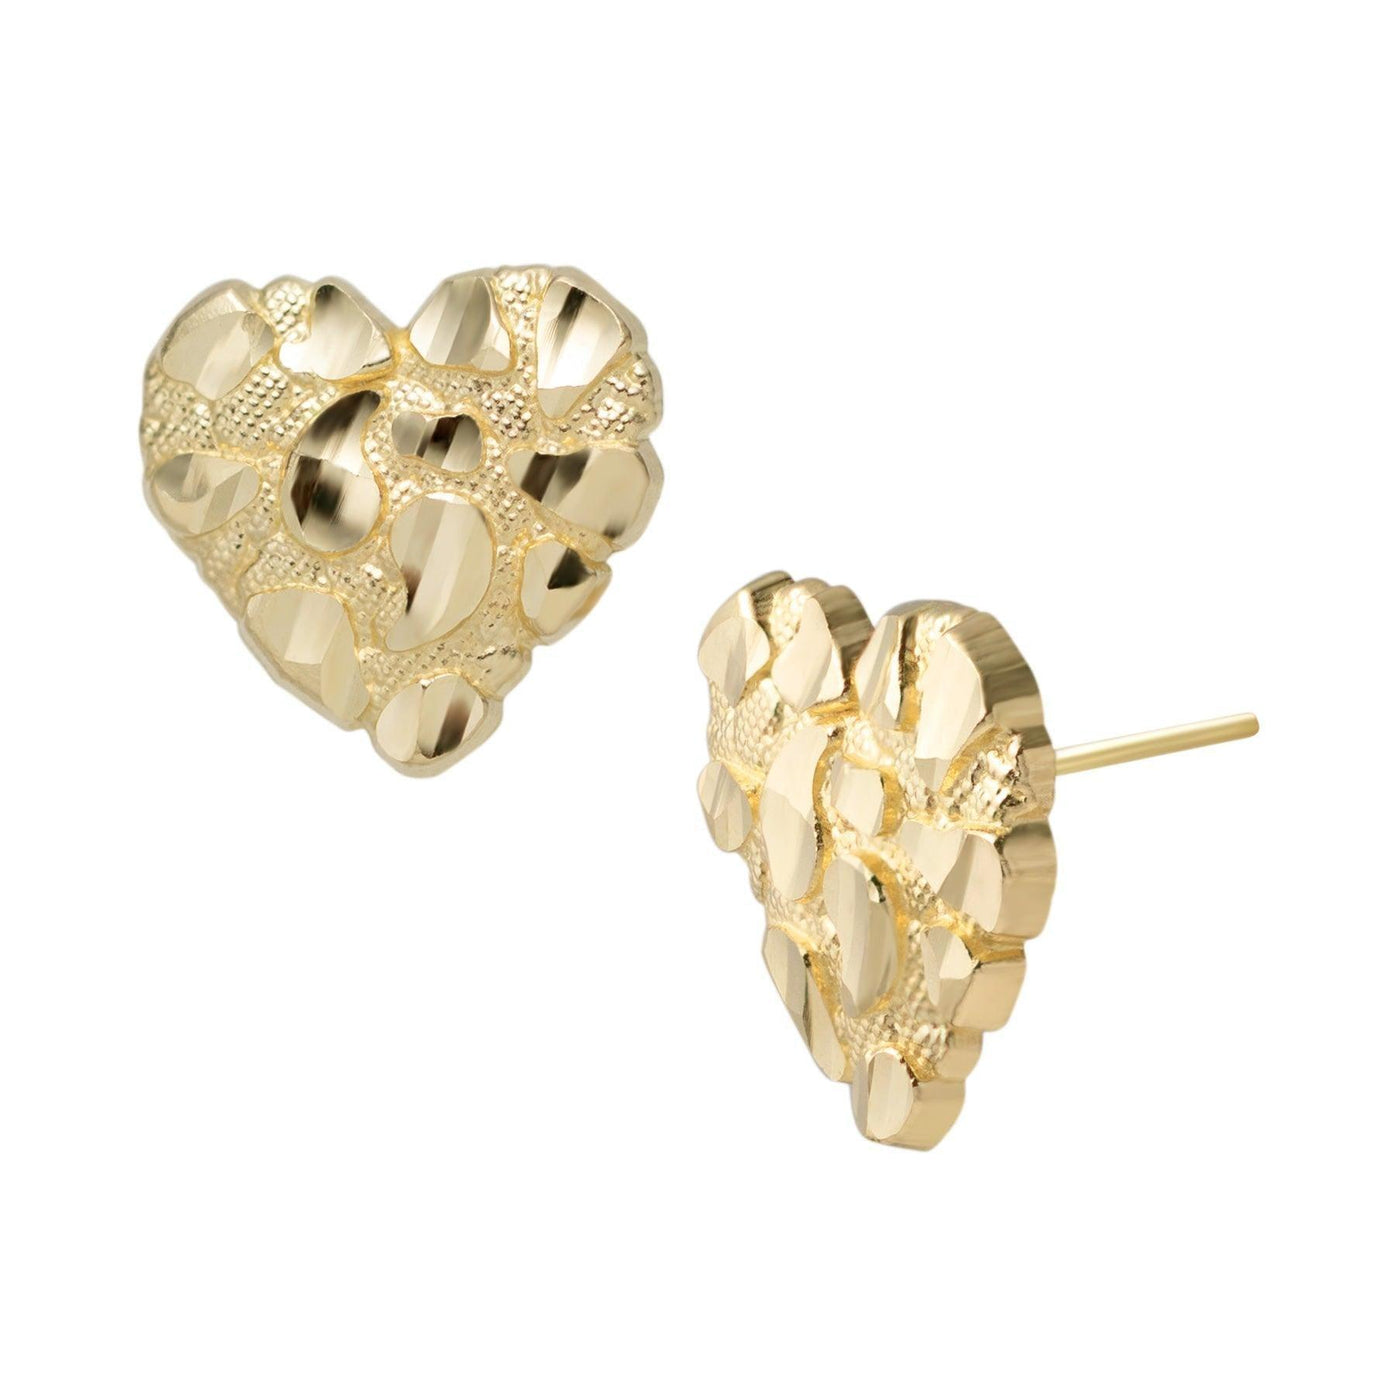 Medium Heart Shape Nugget Stud Earrings Solid 10K Yellow Gold - bayamjewelry